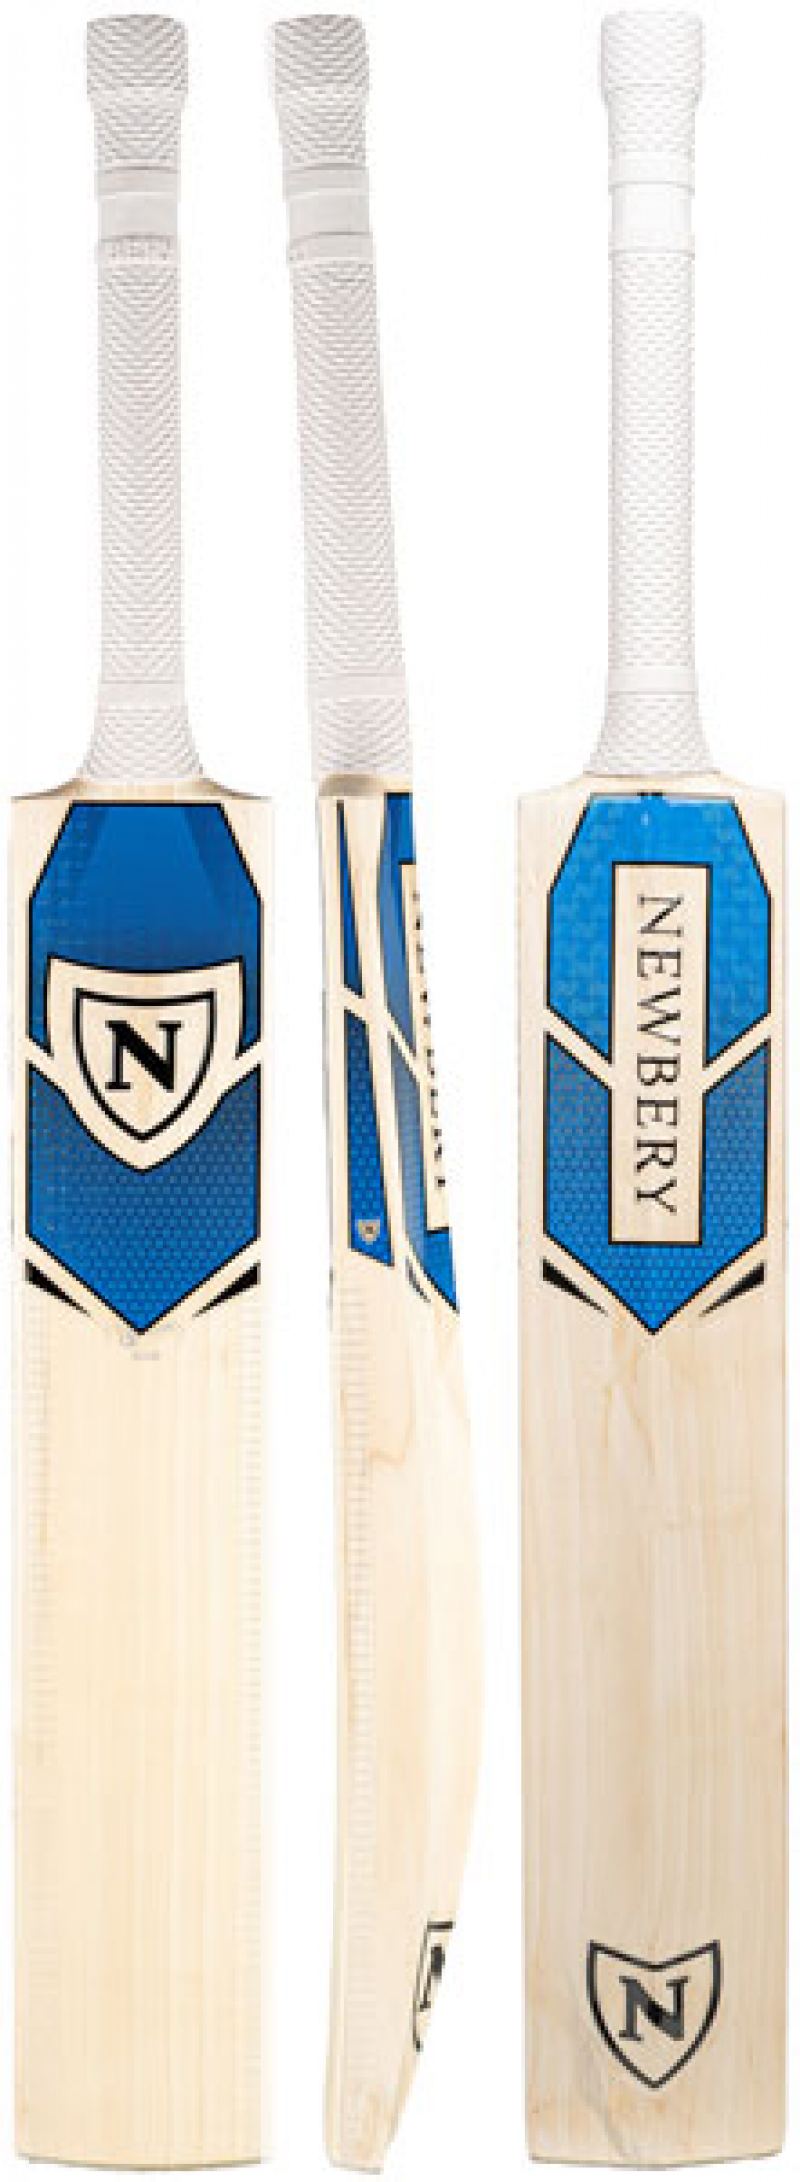 Newbery N Series (Blue) Cricket Bat